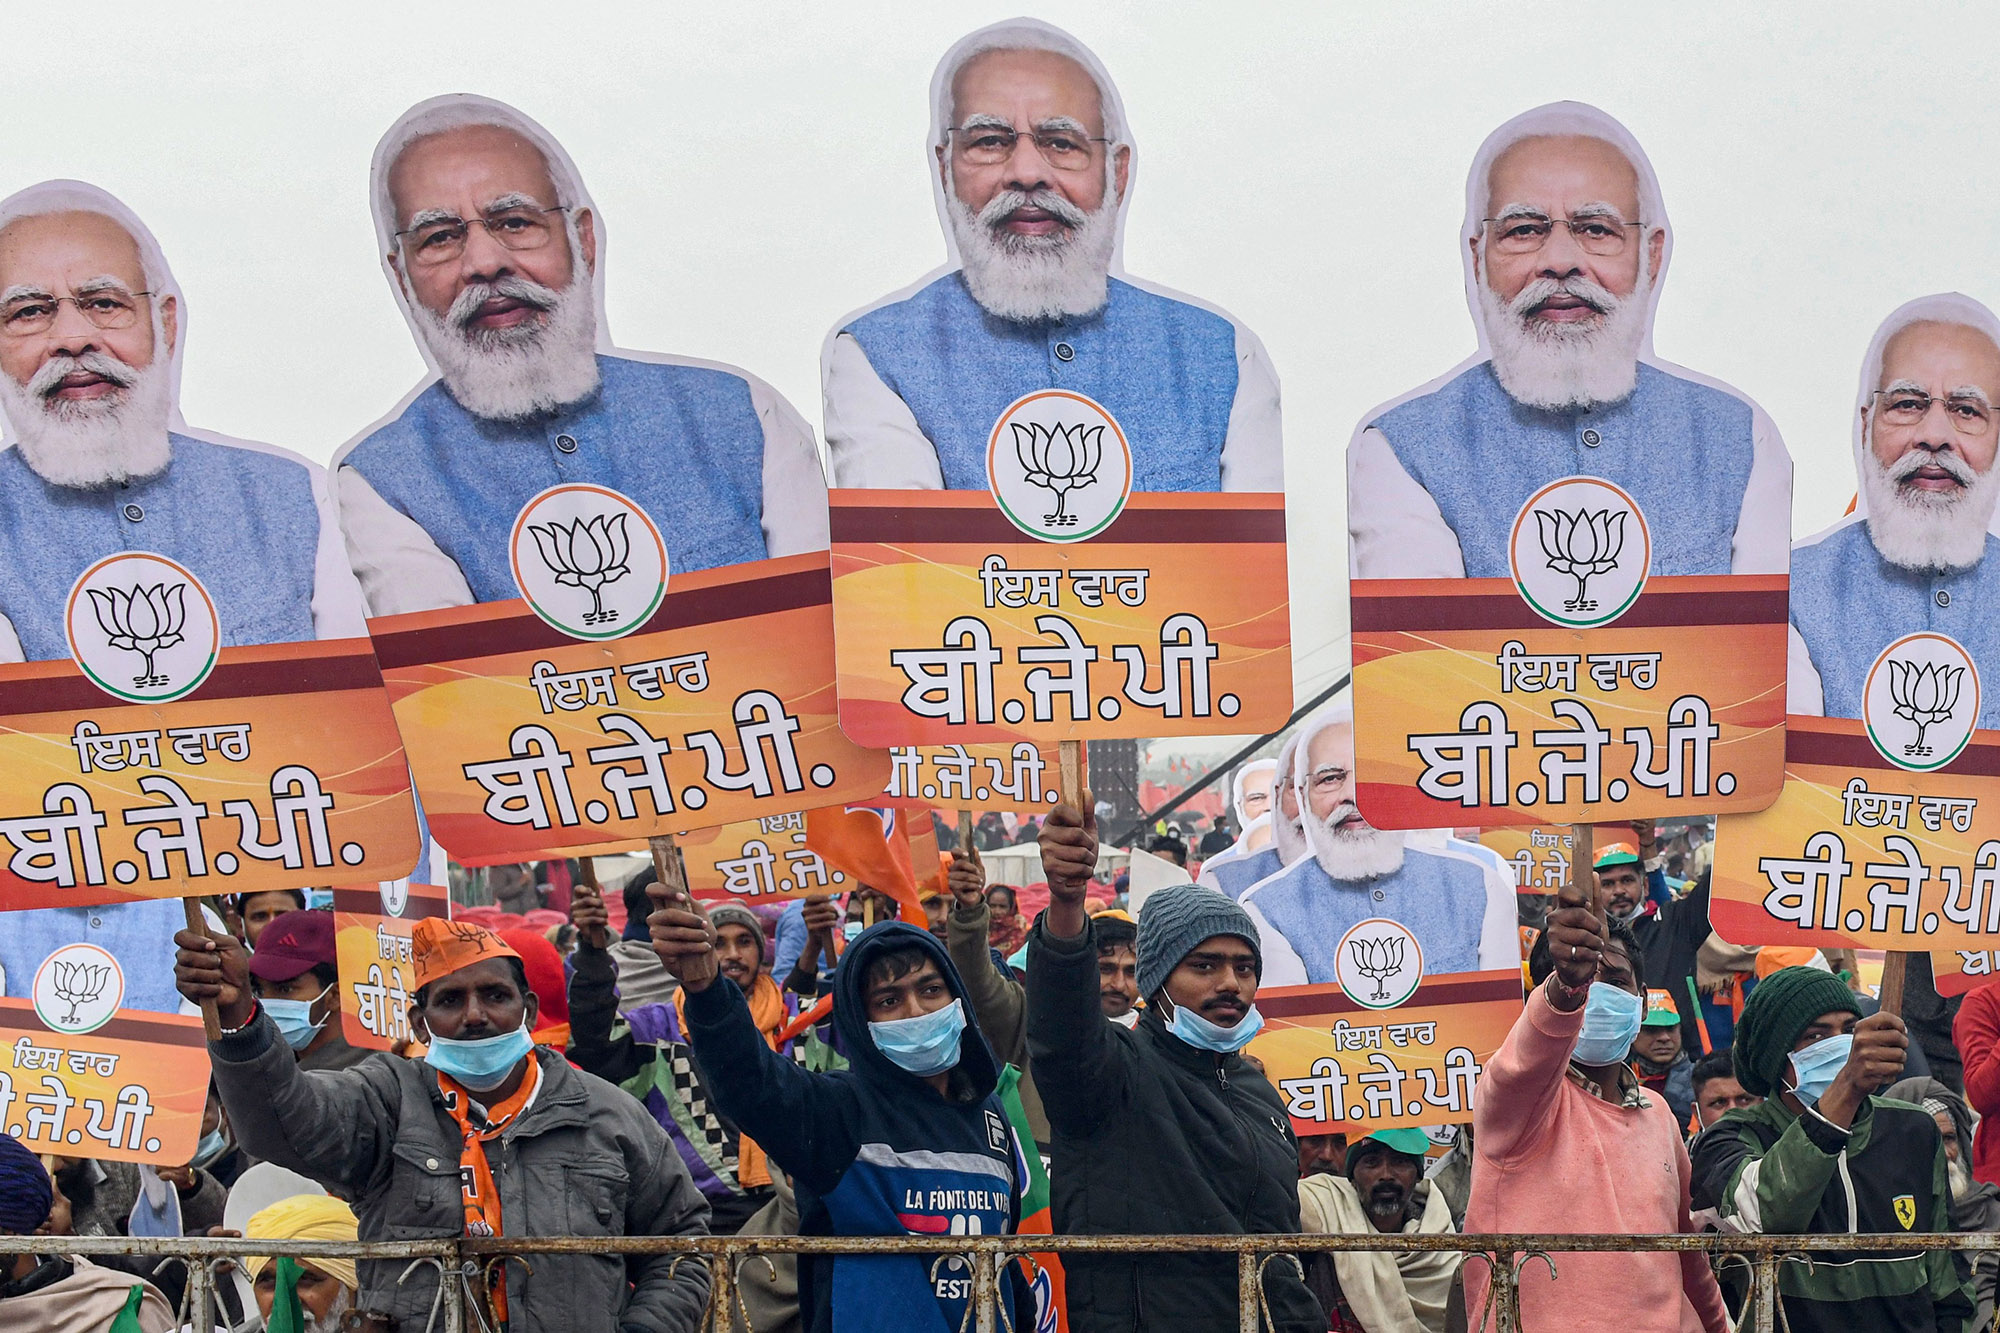 Adani's Power Plans Threaten PM Modi's Promise to Restore the Ganges River